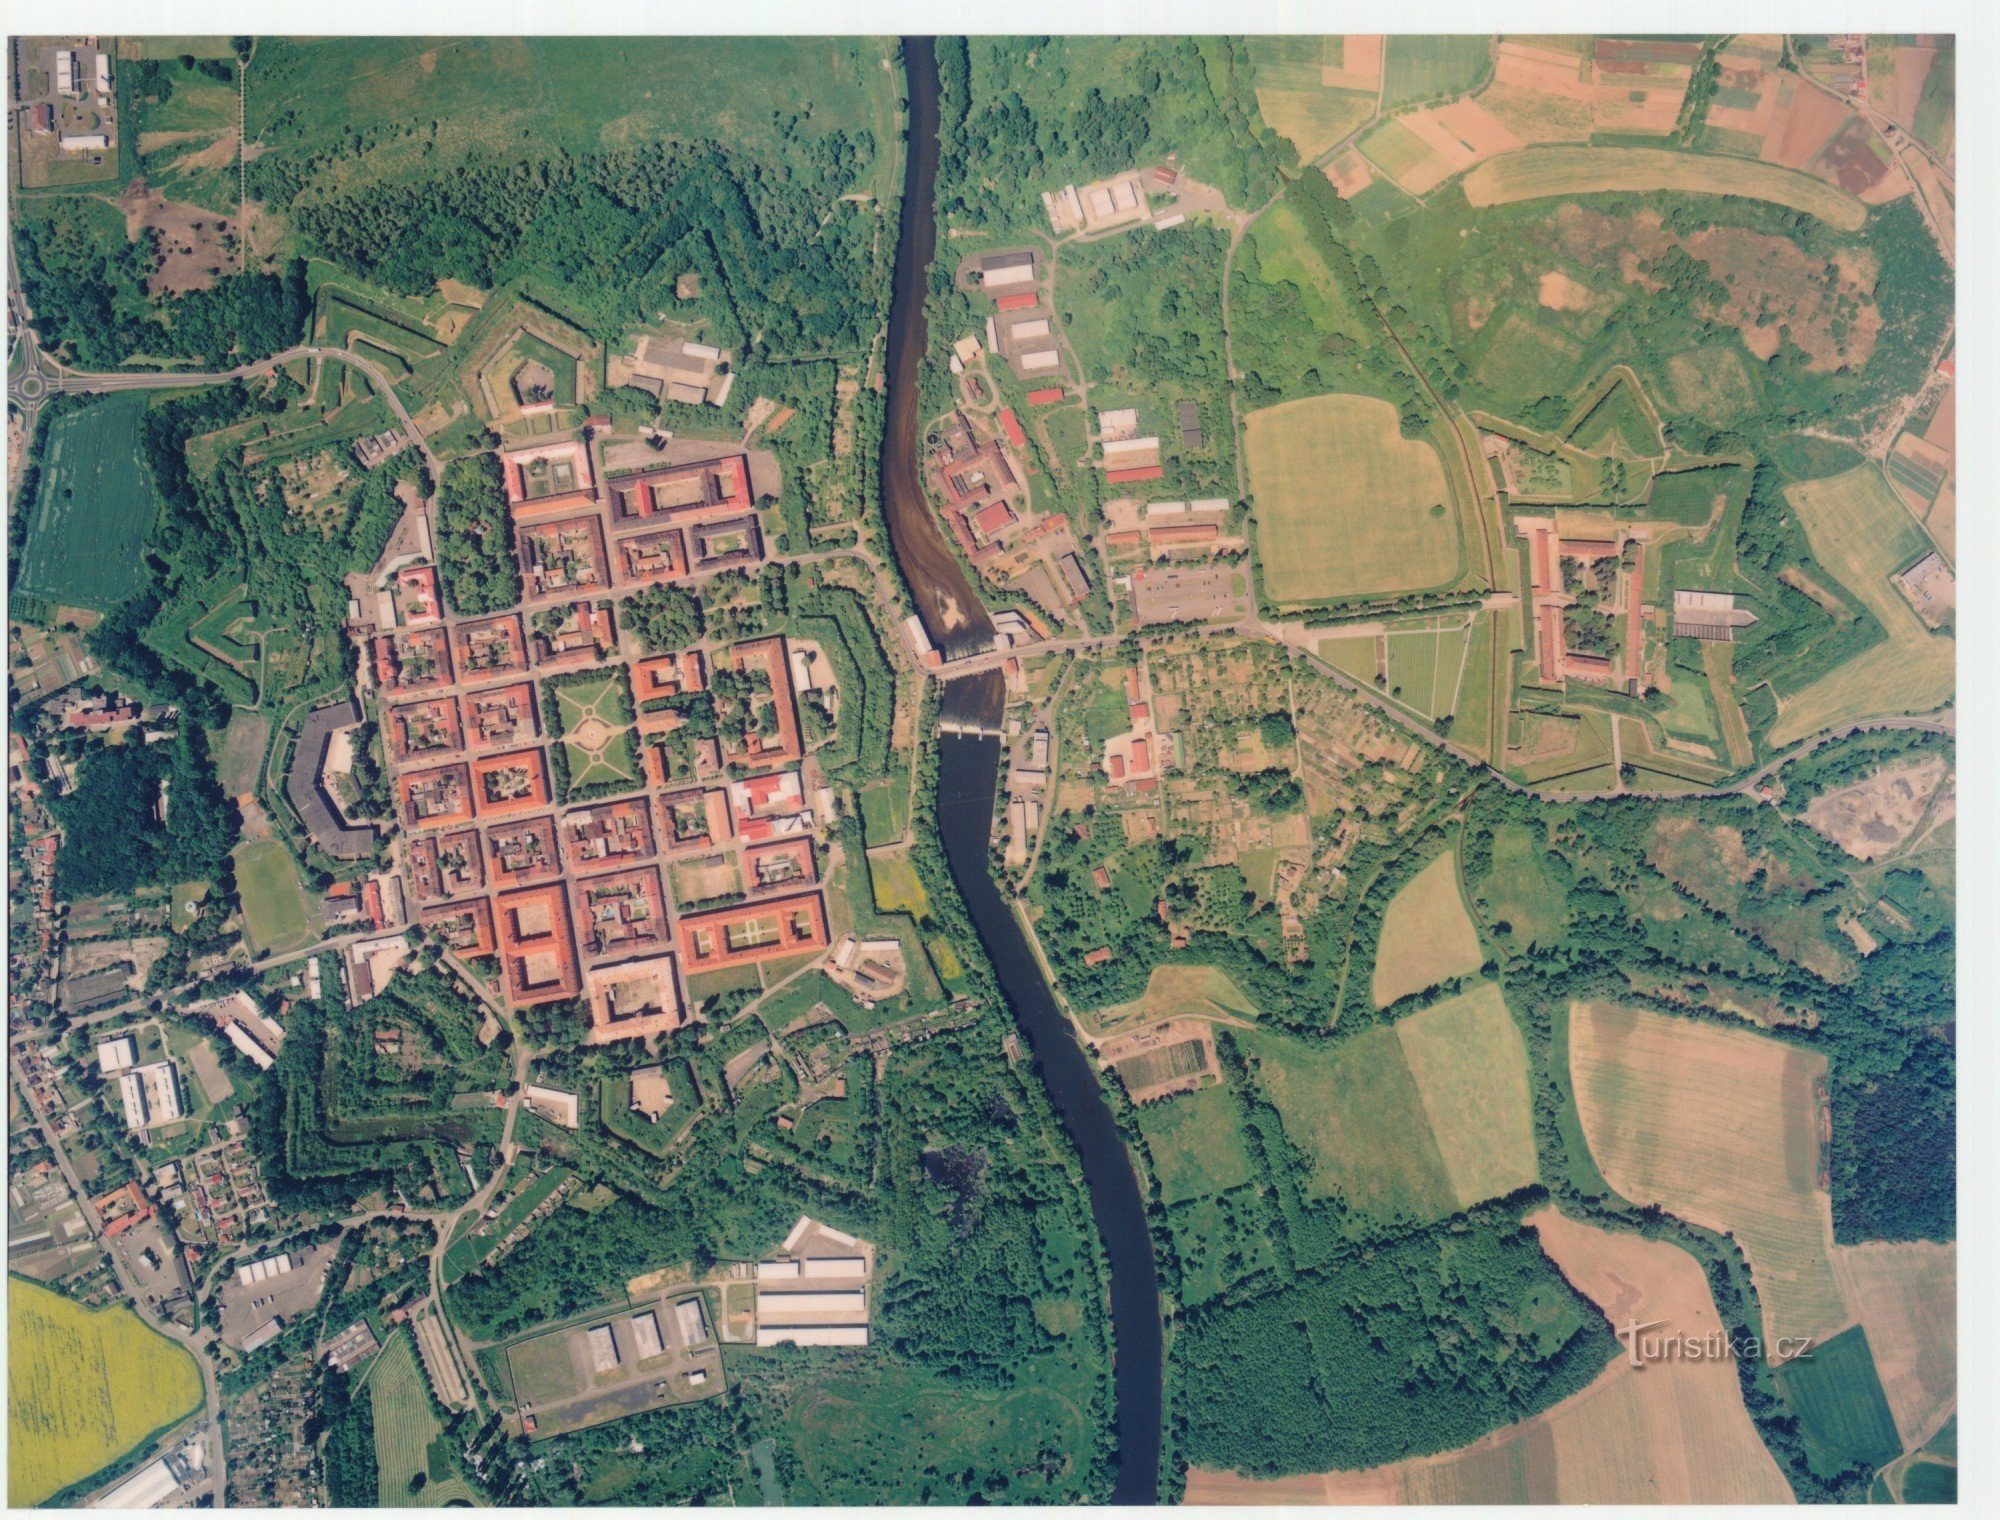 La ville fortifiée de Terezín